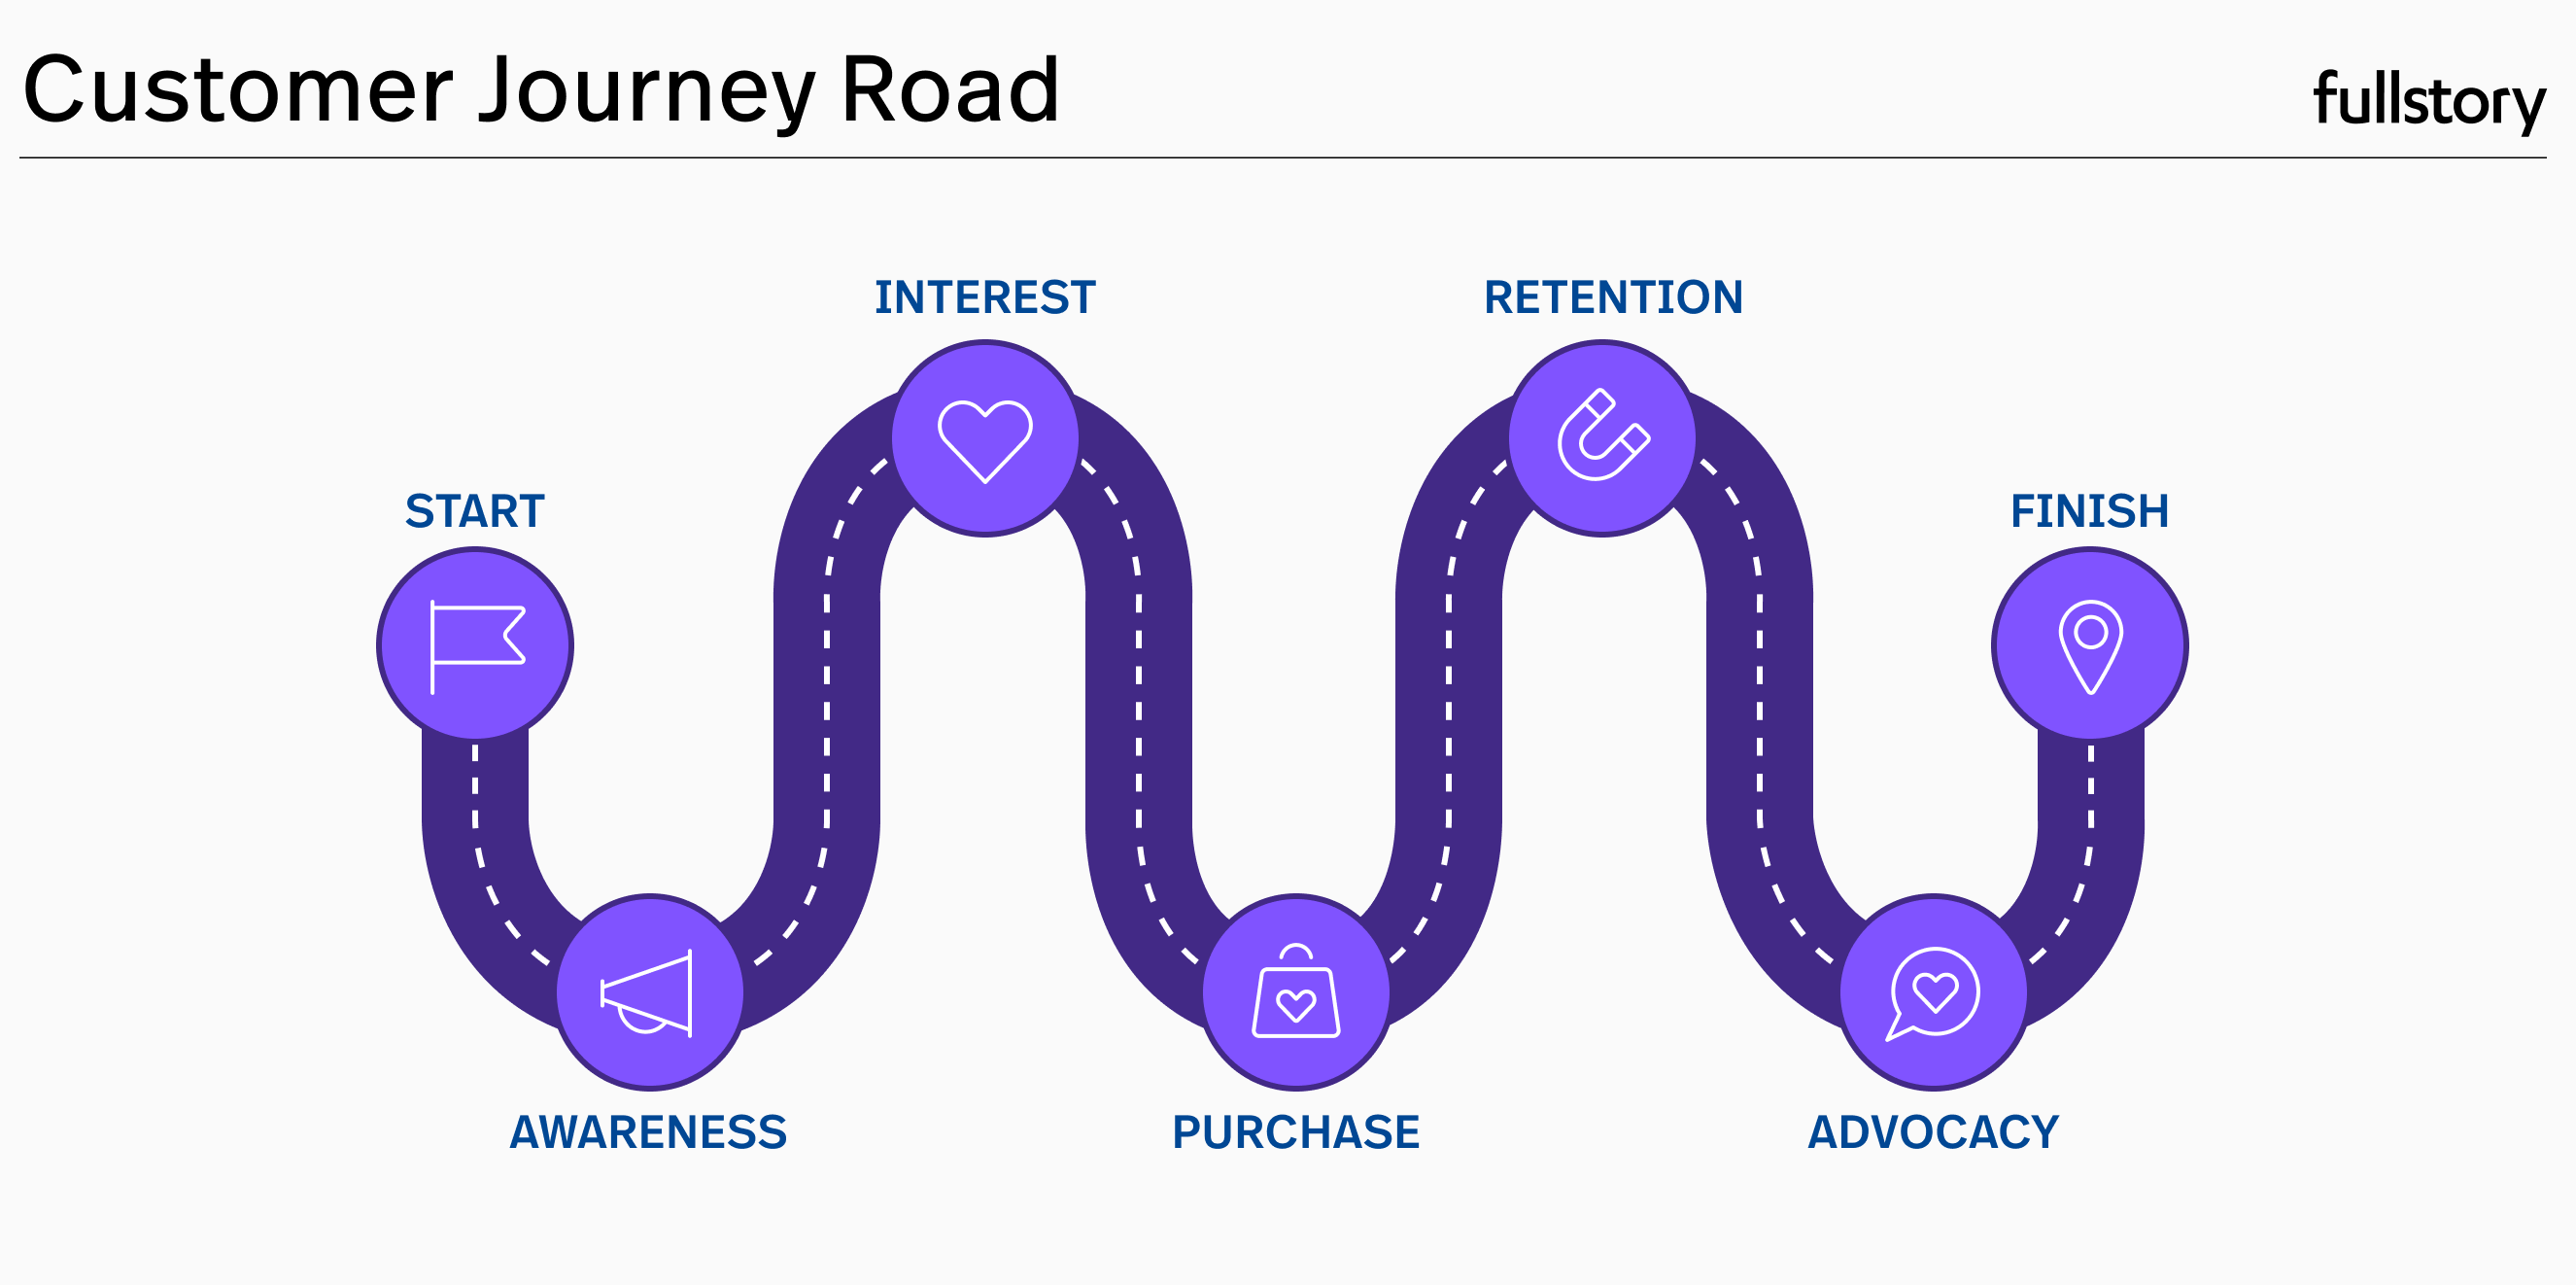 Customer journey road: Start, awareness, interest, purchase, retention, advocacy.